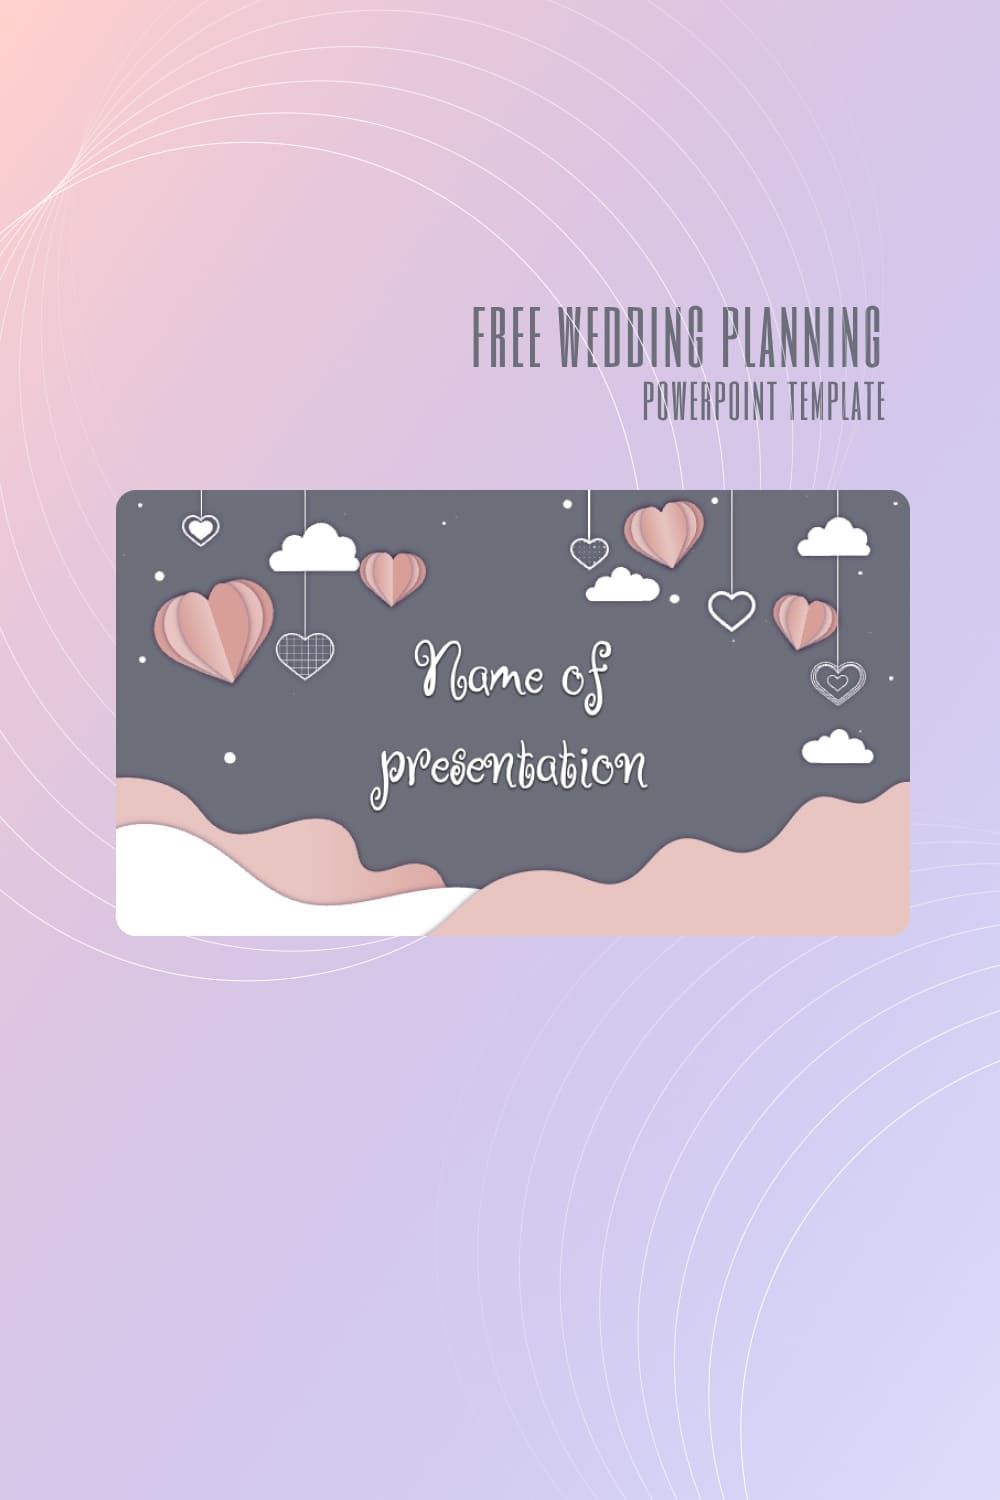 Pinterest Free Wedding Planning Powerpoint Template.